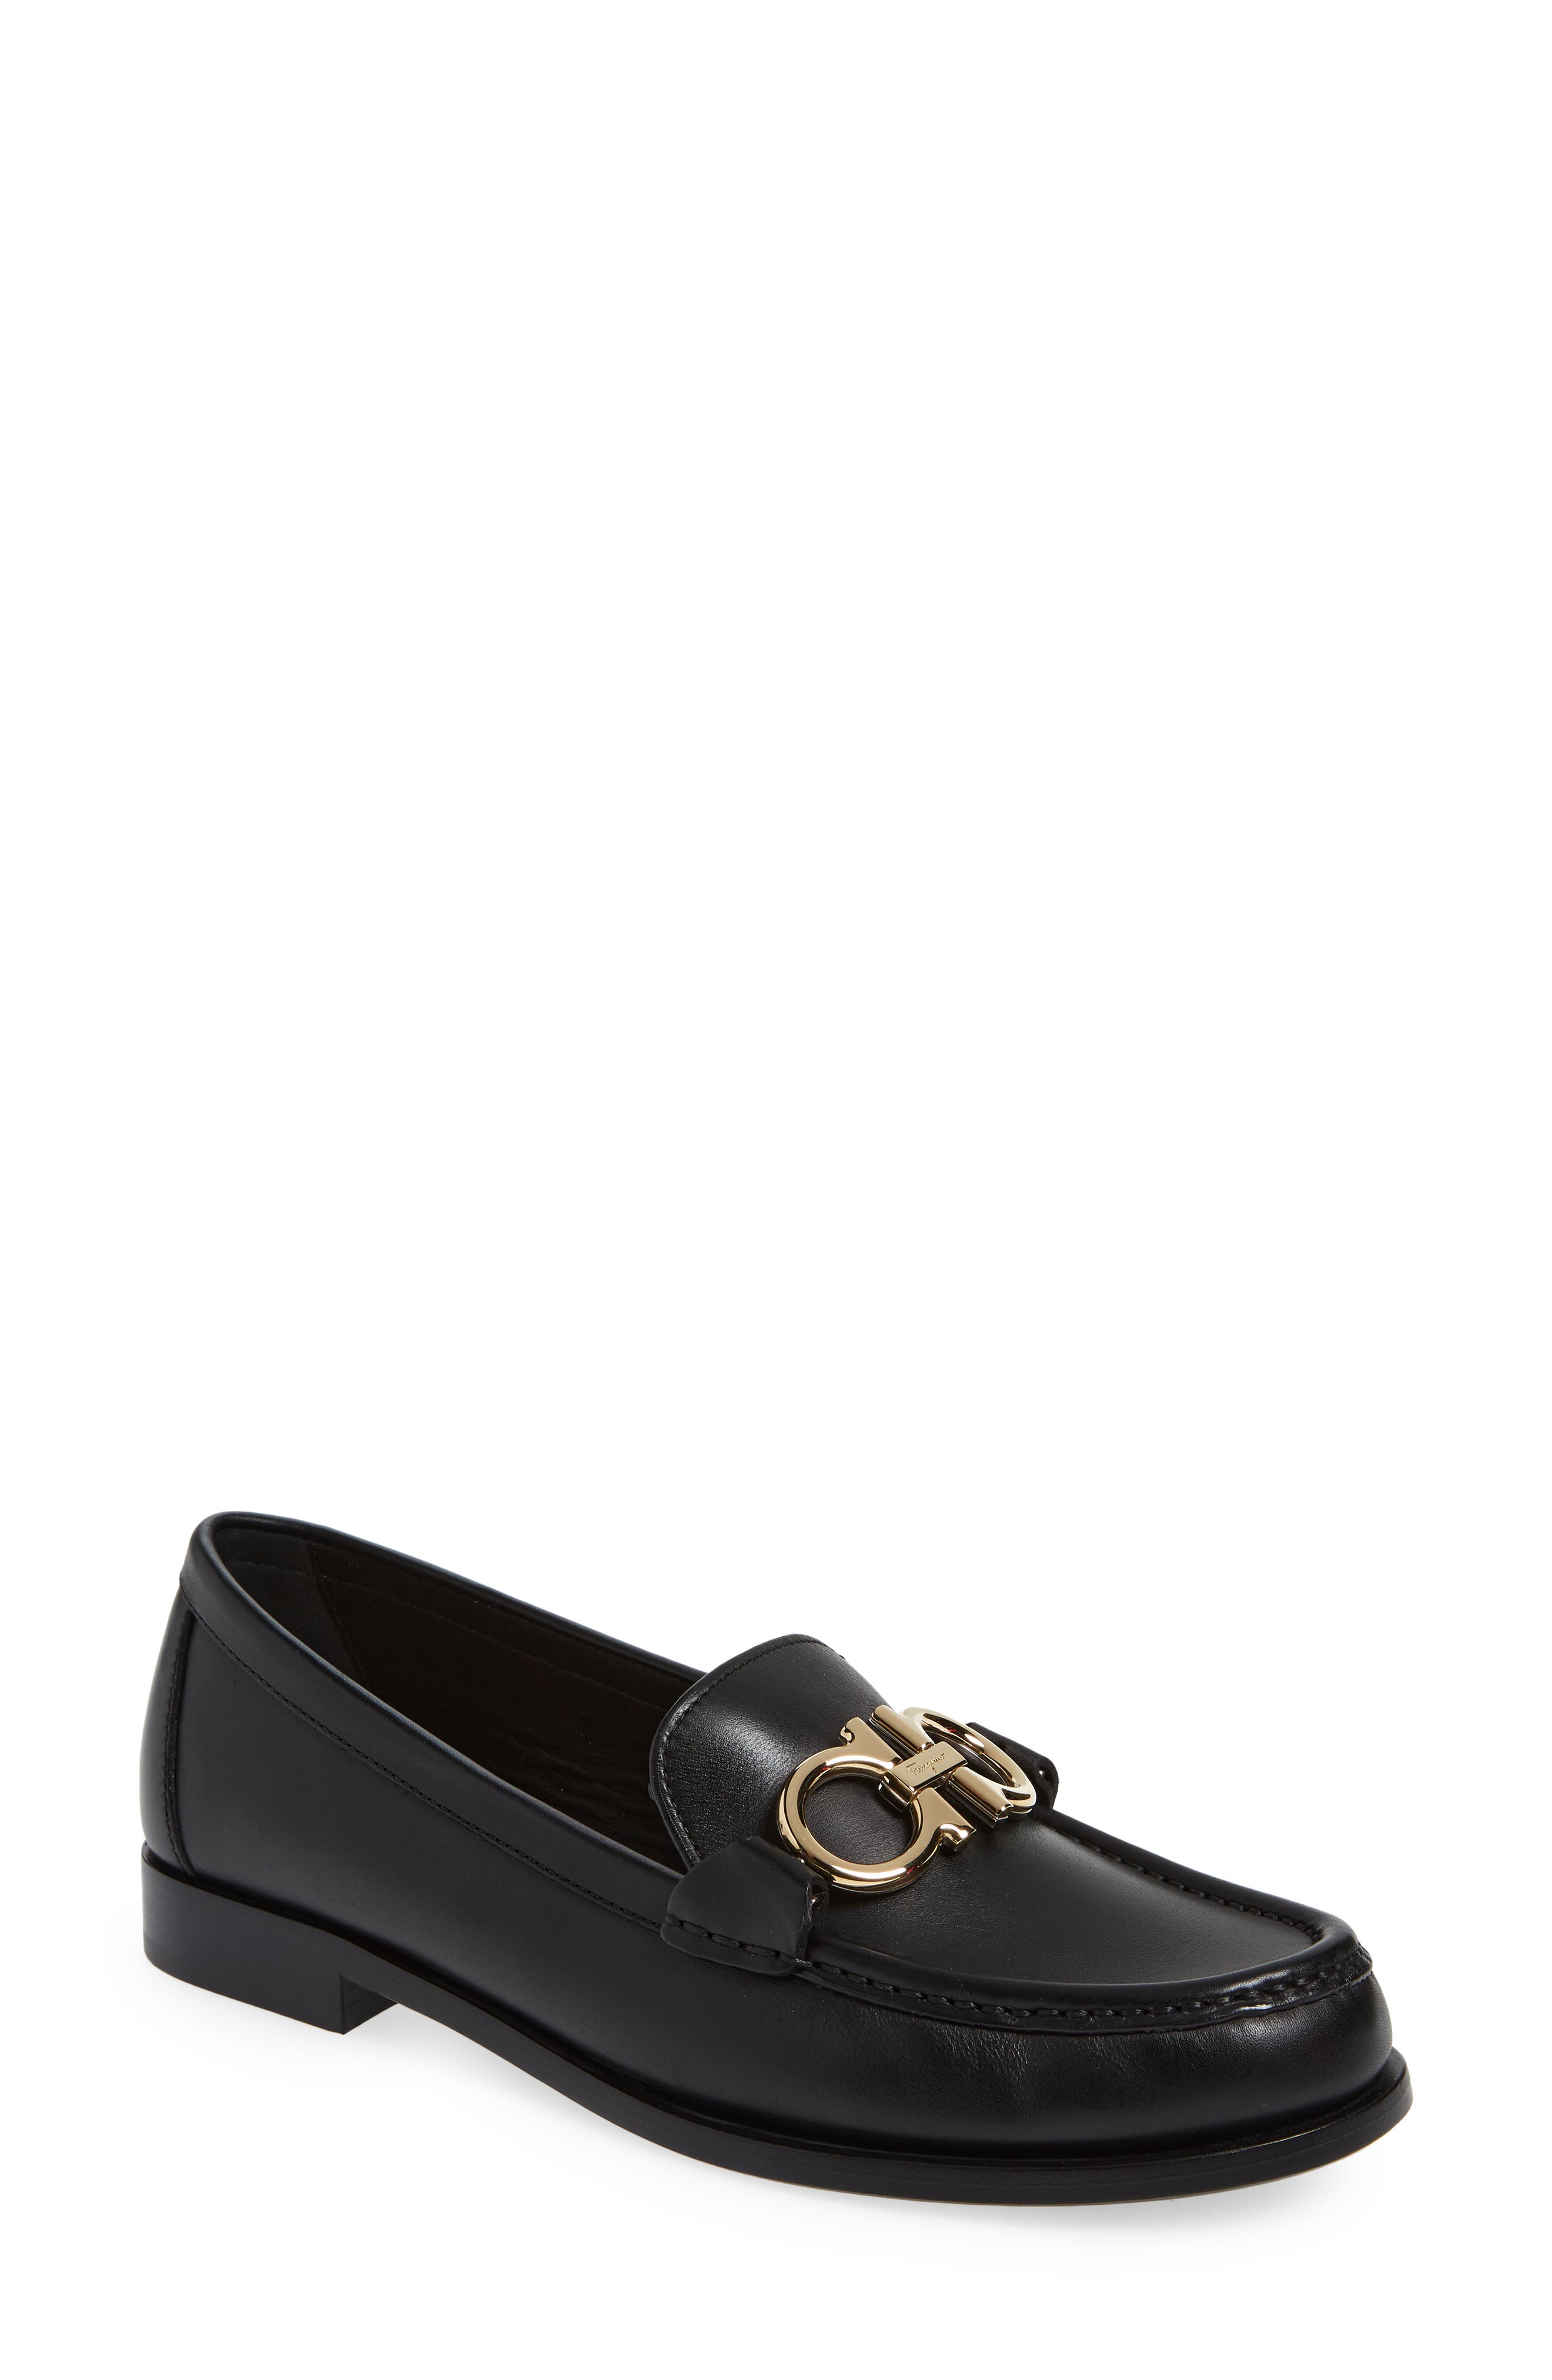 Ferragamo Leather Loafer in Black Womens Flats and flat shoes Ferragamo Flats and flat shoes 